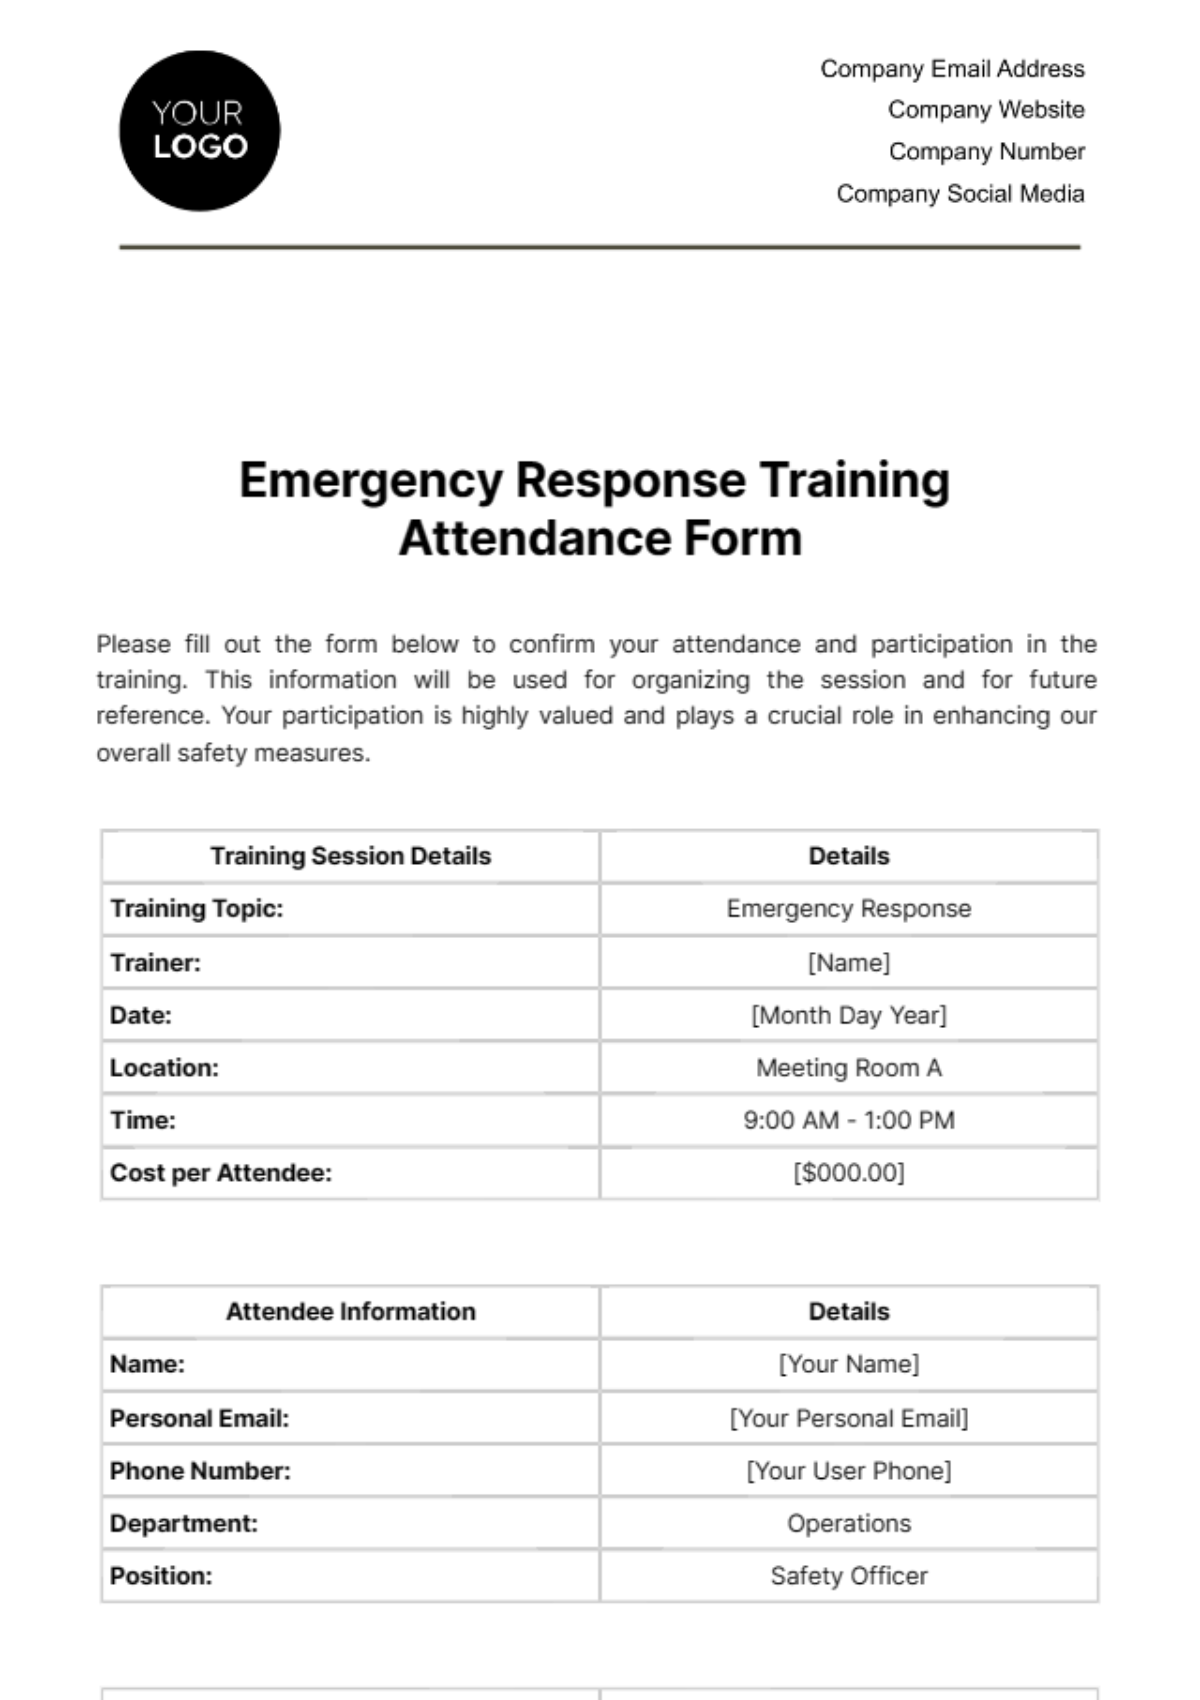 Emergency Response Training Attendance Form Template